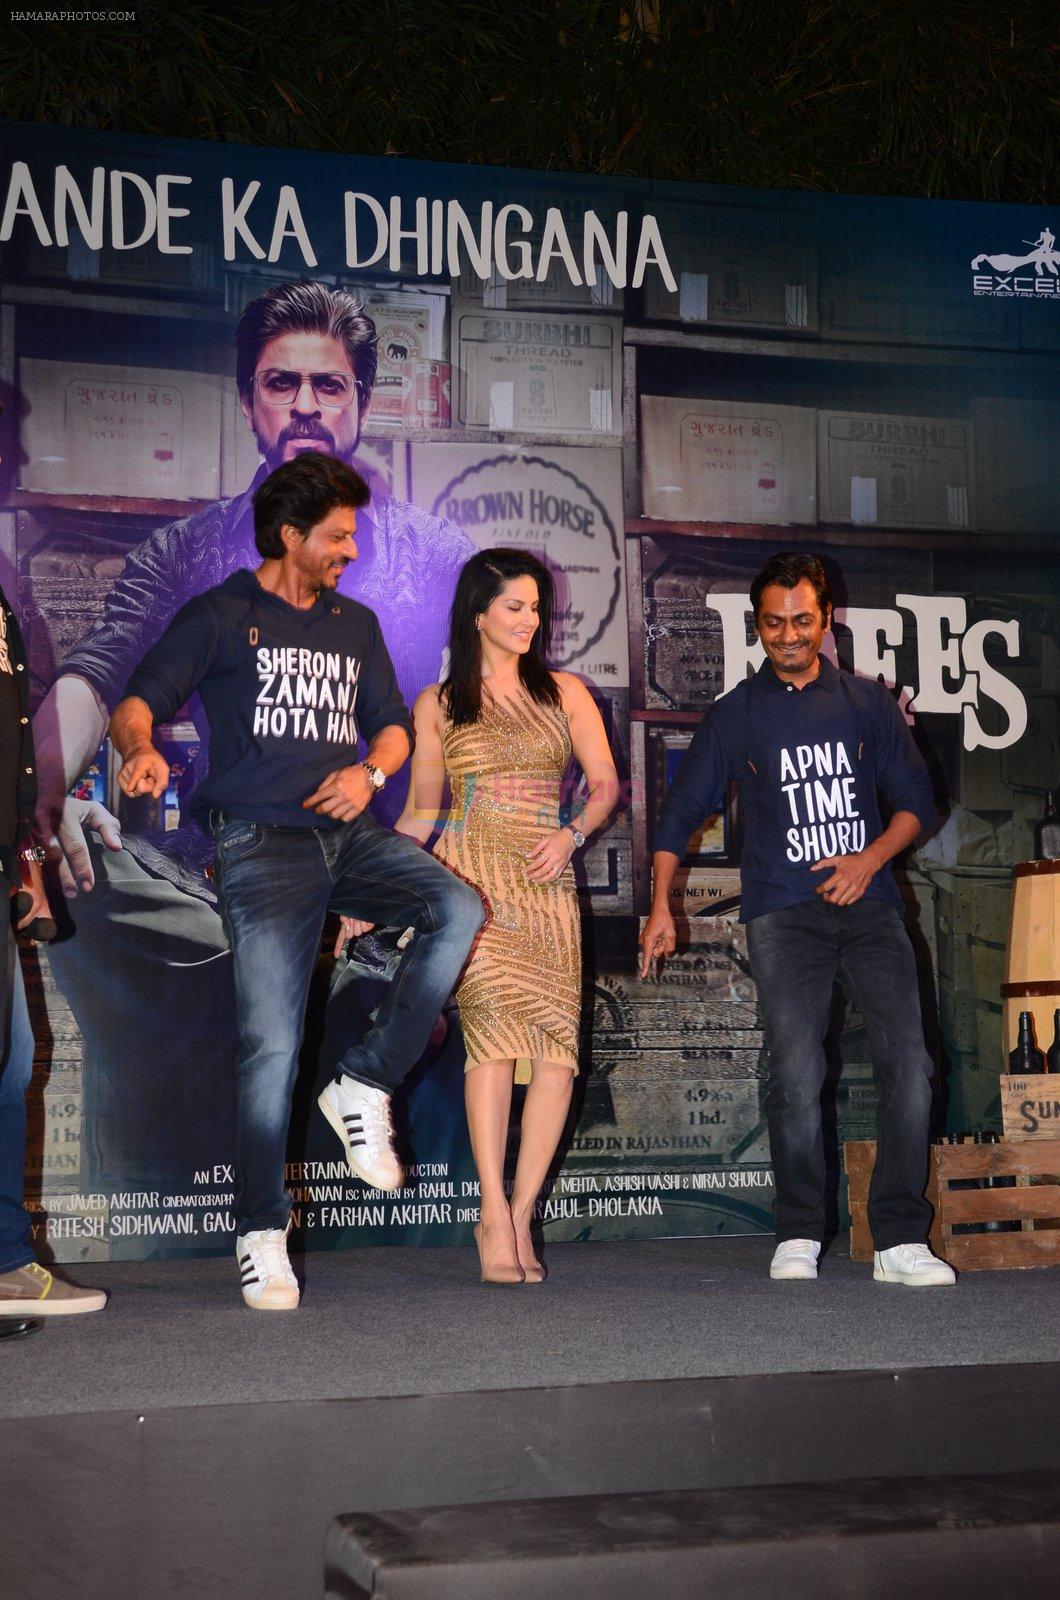 Shah Rukh Khan, Sunny Leone, Nawazuddin Siddiqui at Raees success bash in Mumbai on 30th Jan 2017